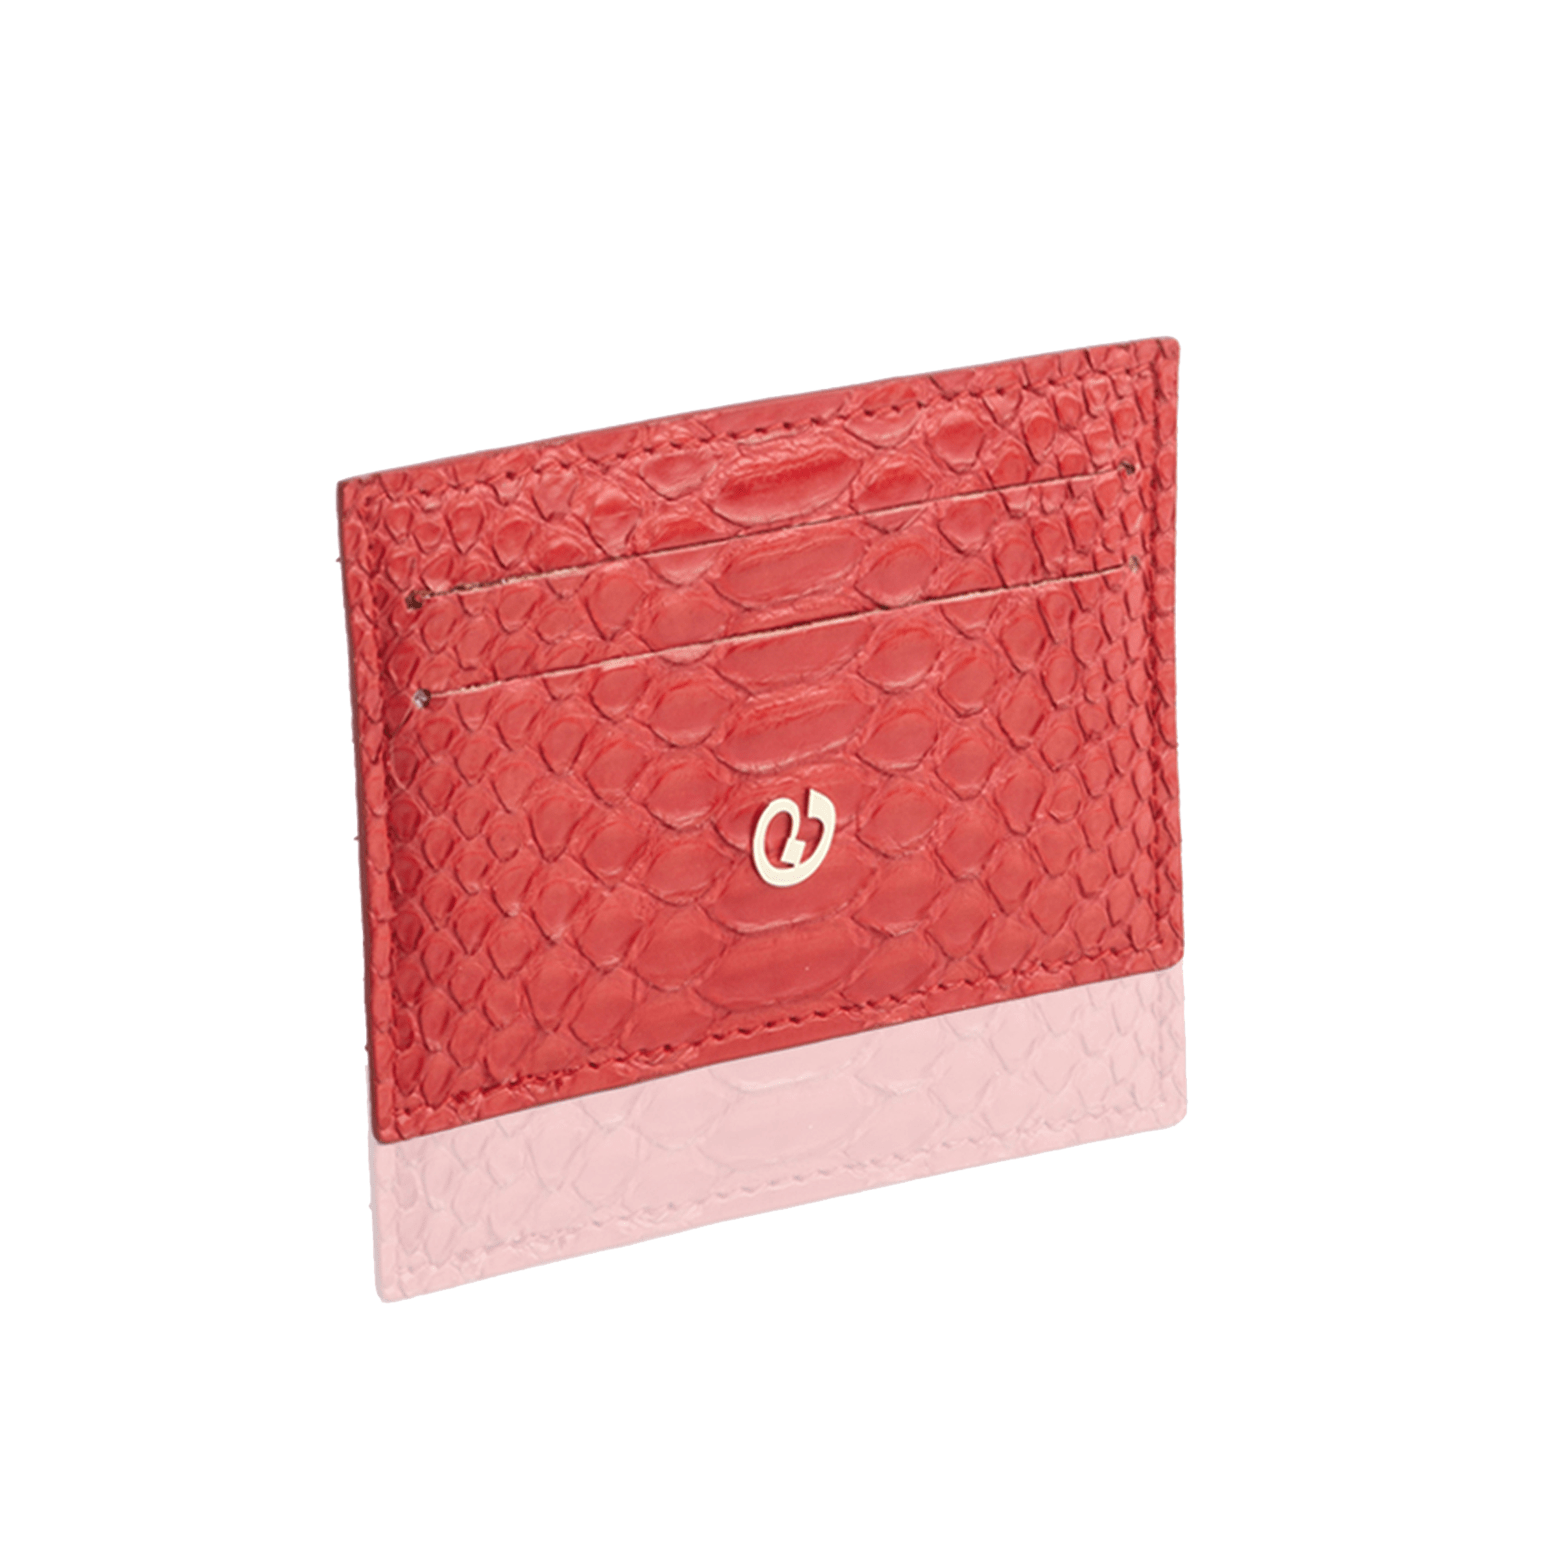 FL by NADA SAWAYA Card Case Red / Light gold Python Card Case